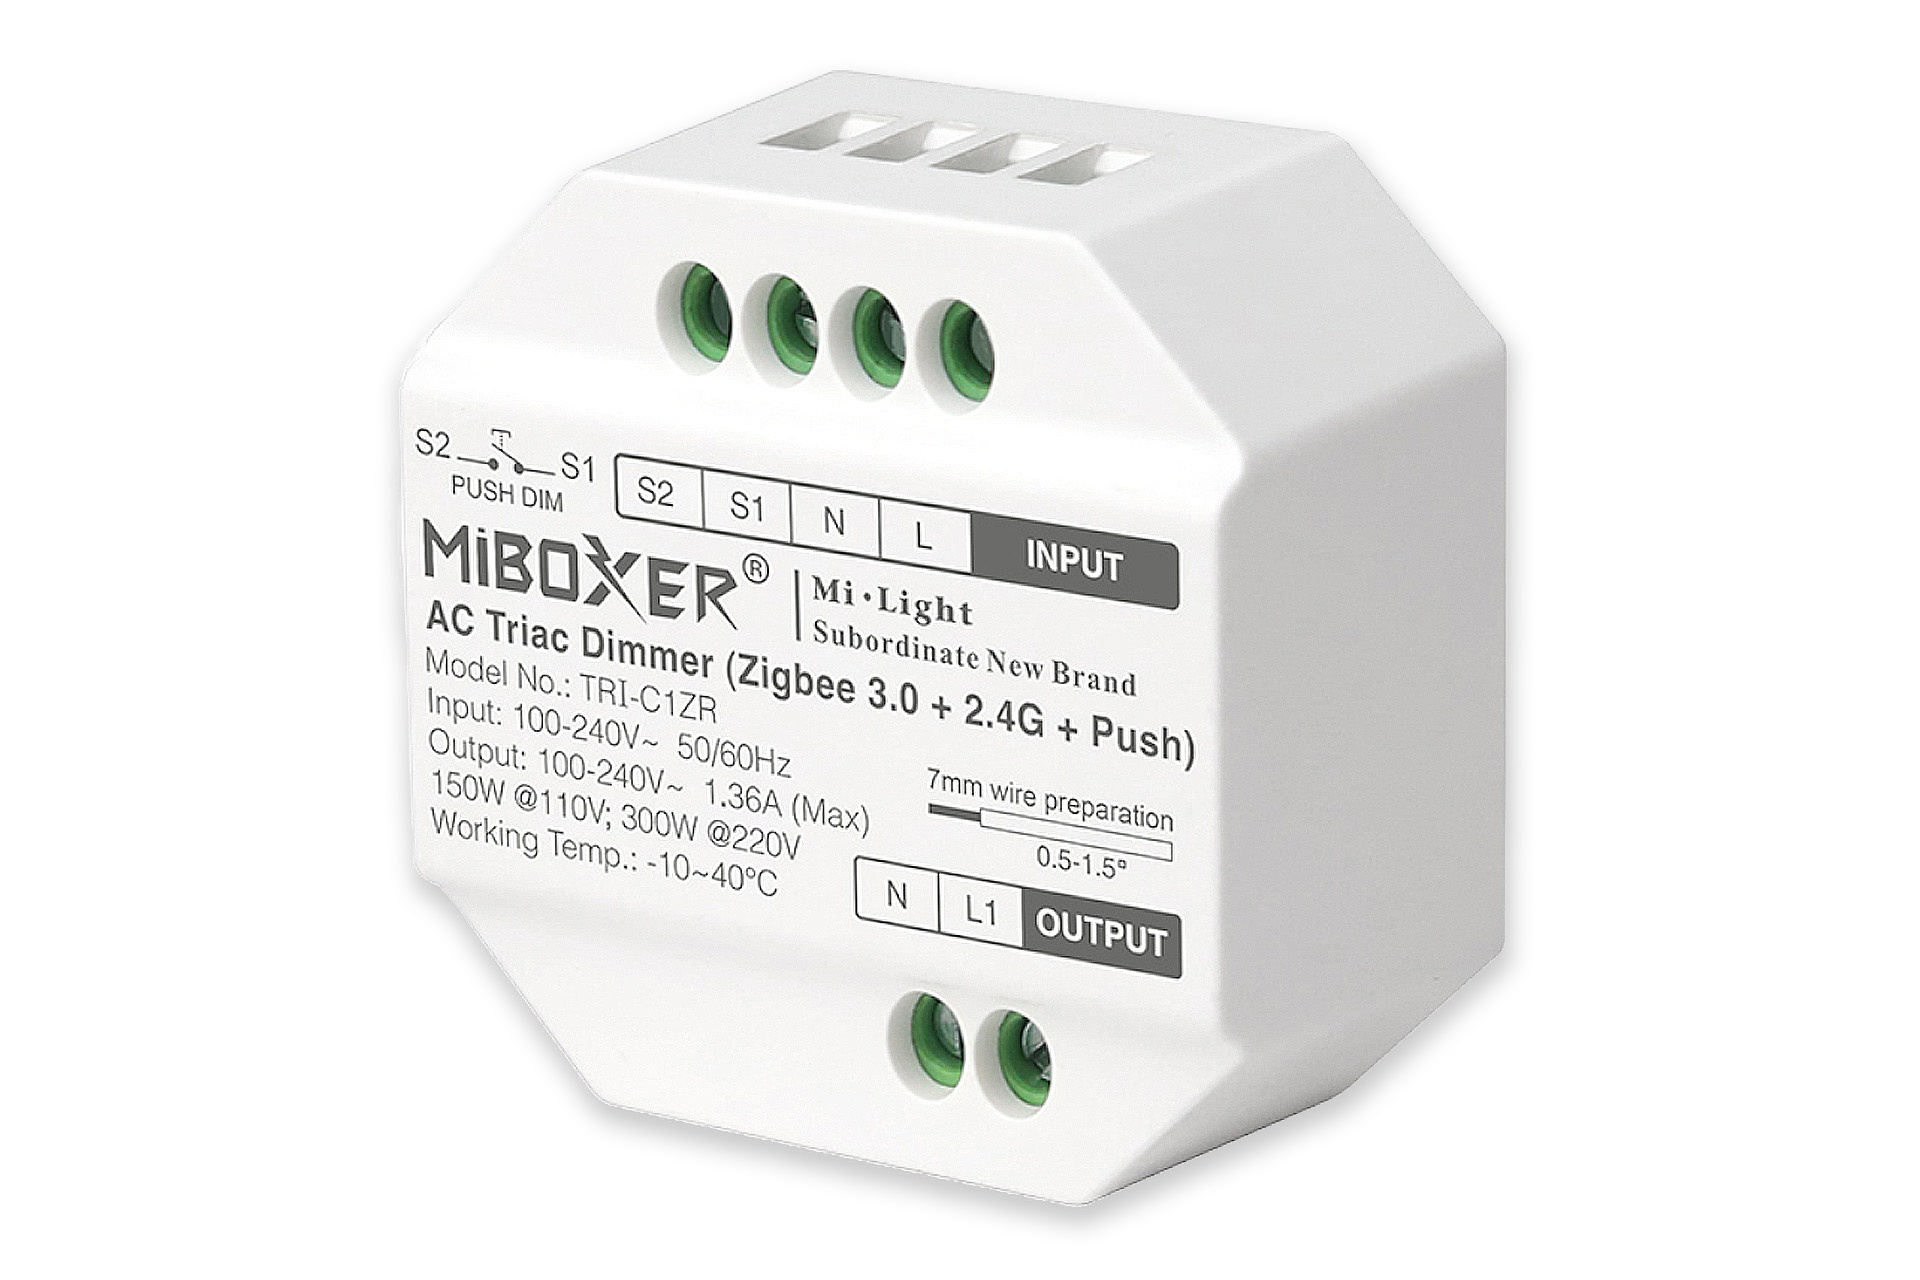 Miboxer AC triac dimmer zigbee 3.0 + 2.4G + Push